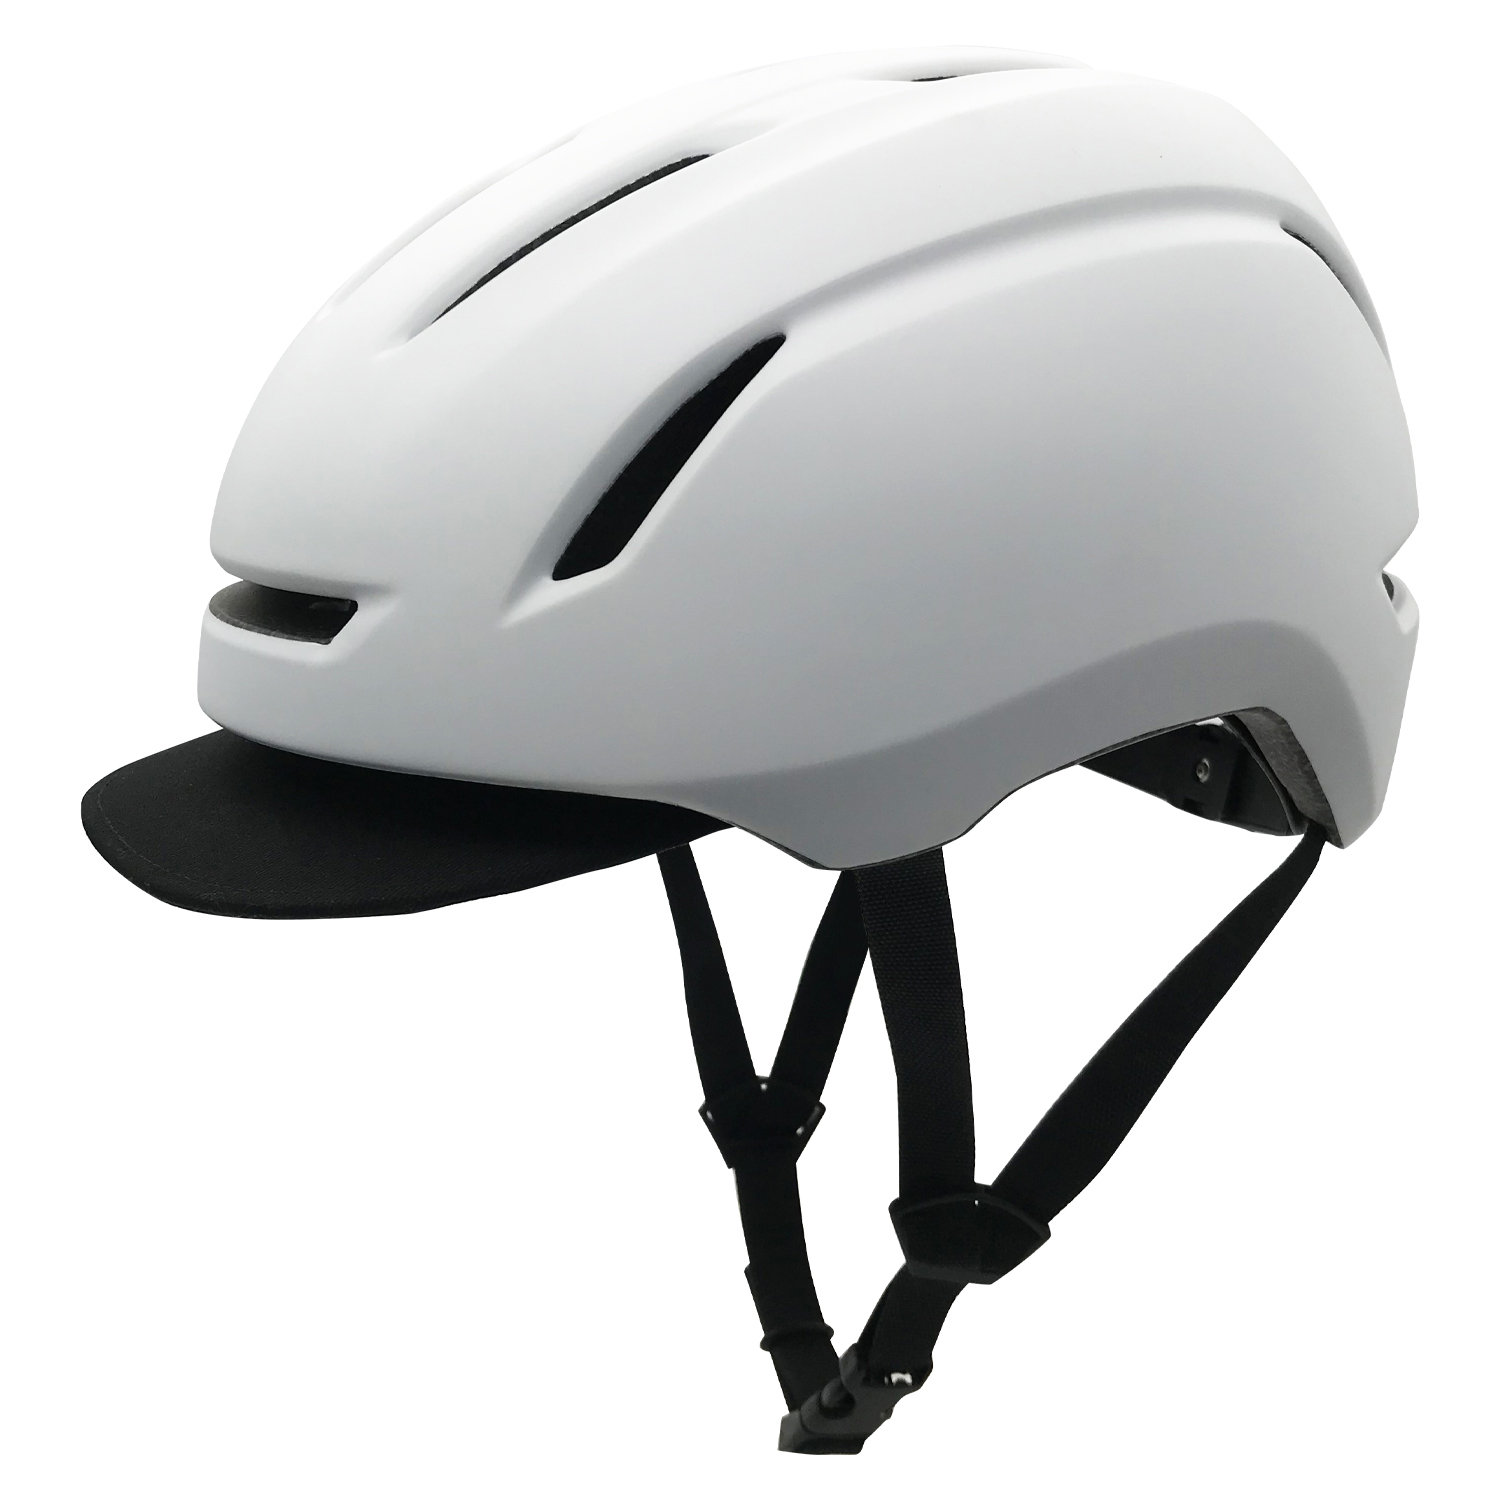 Big Discount Sleek Bike Helmet - Commuter Helmet VU102-White – Vital